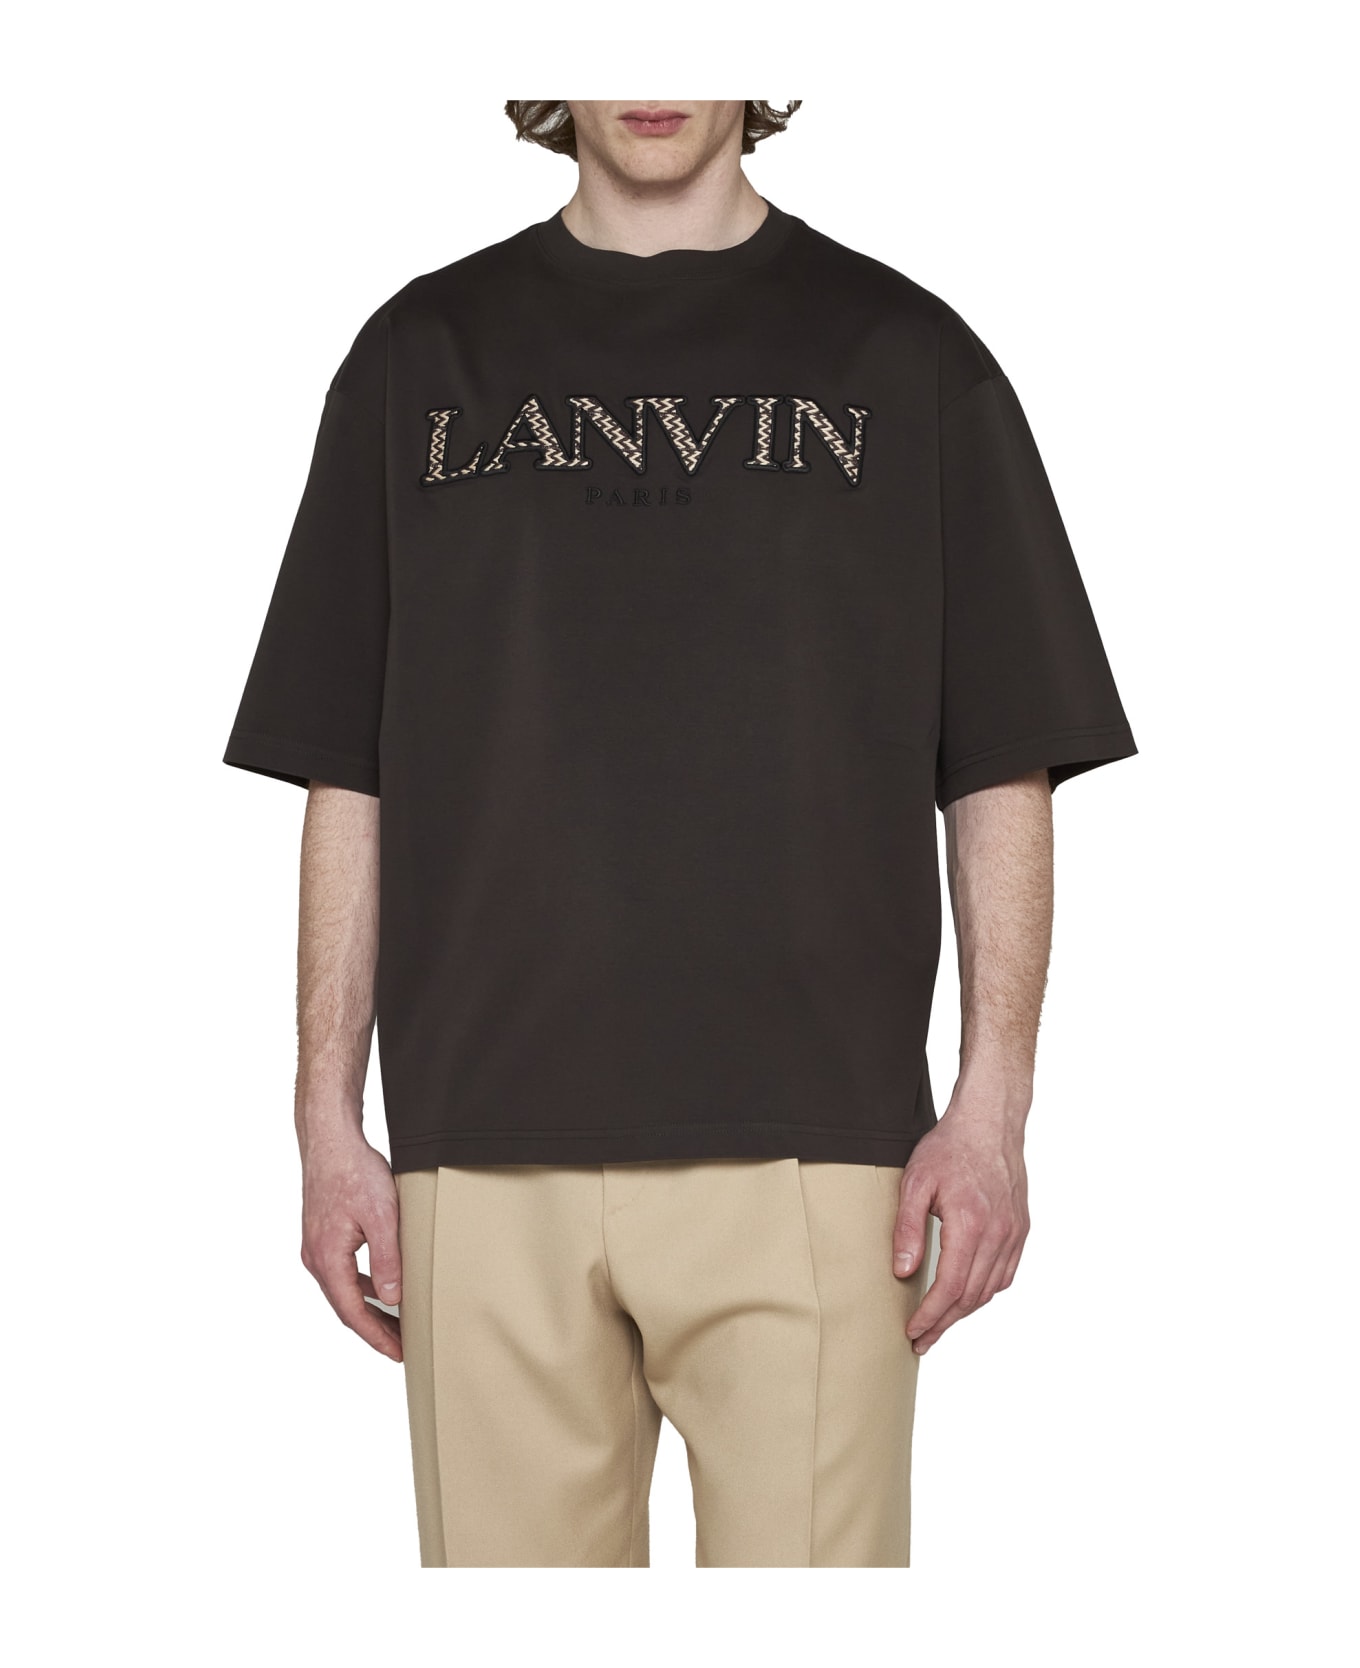 Lanvin T-Shirt - Ebony